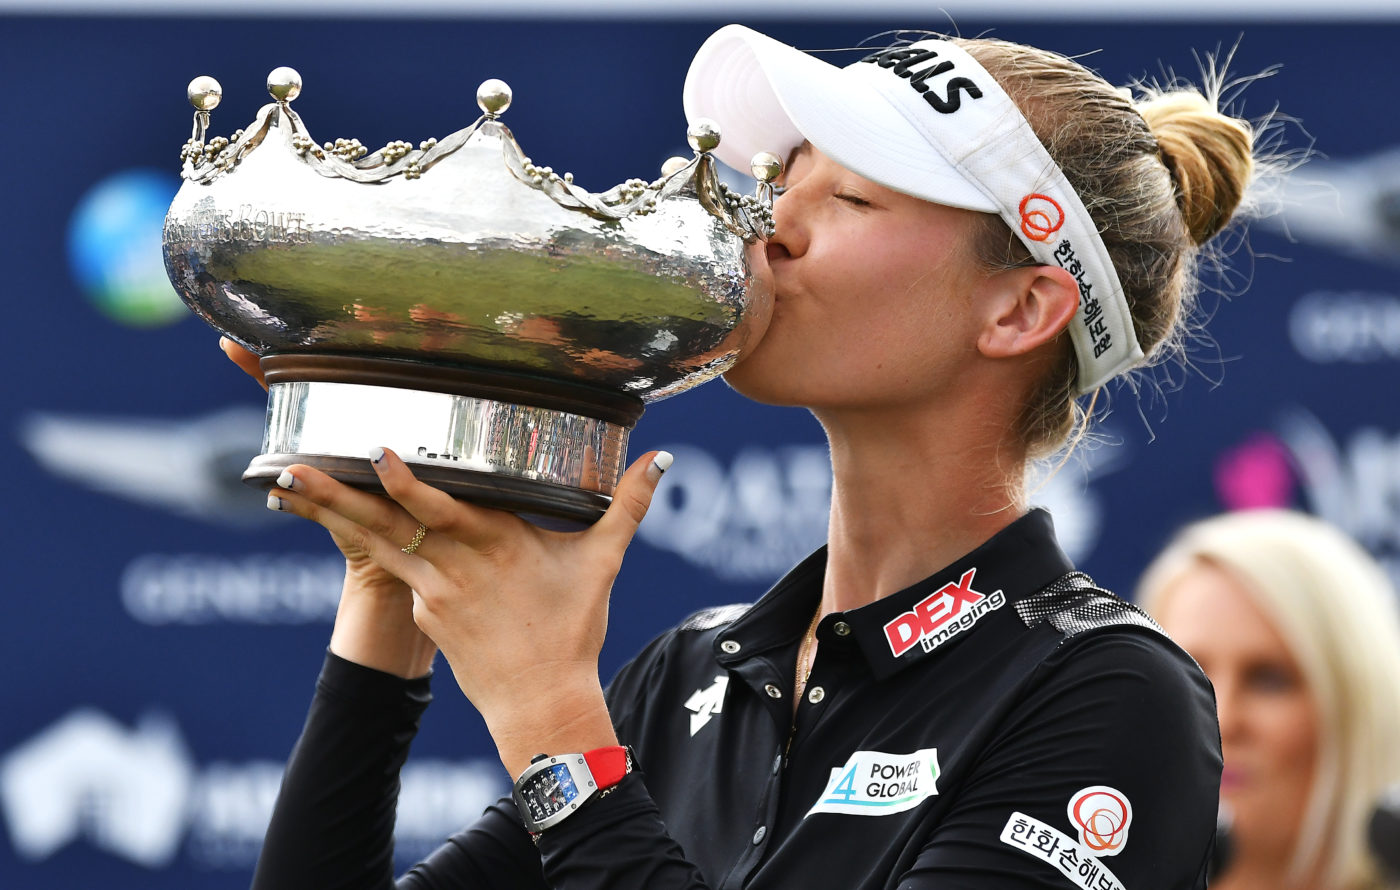 $10 Million:  Women's U.S. Open Makes Sports History